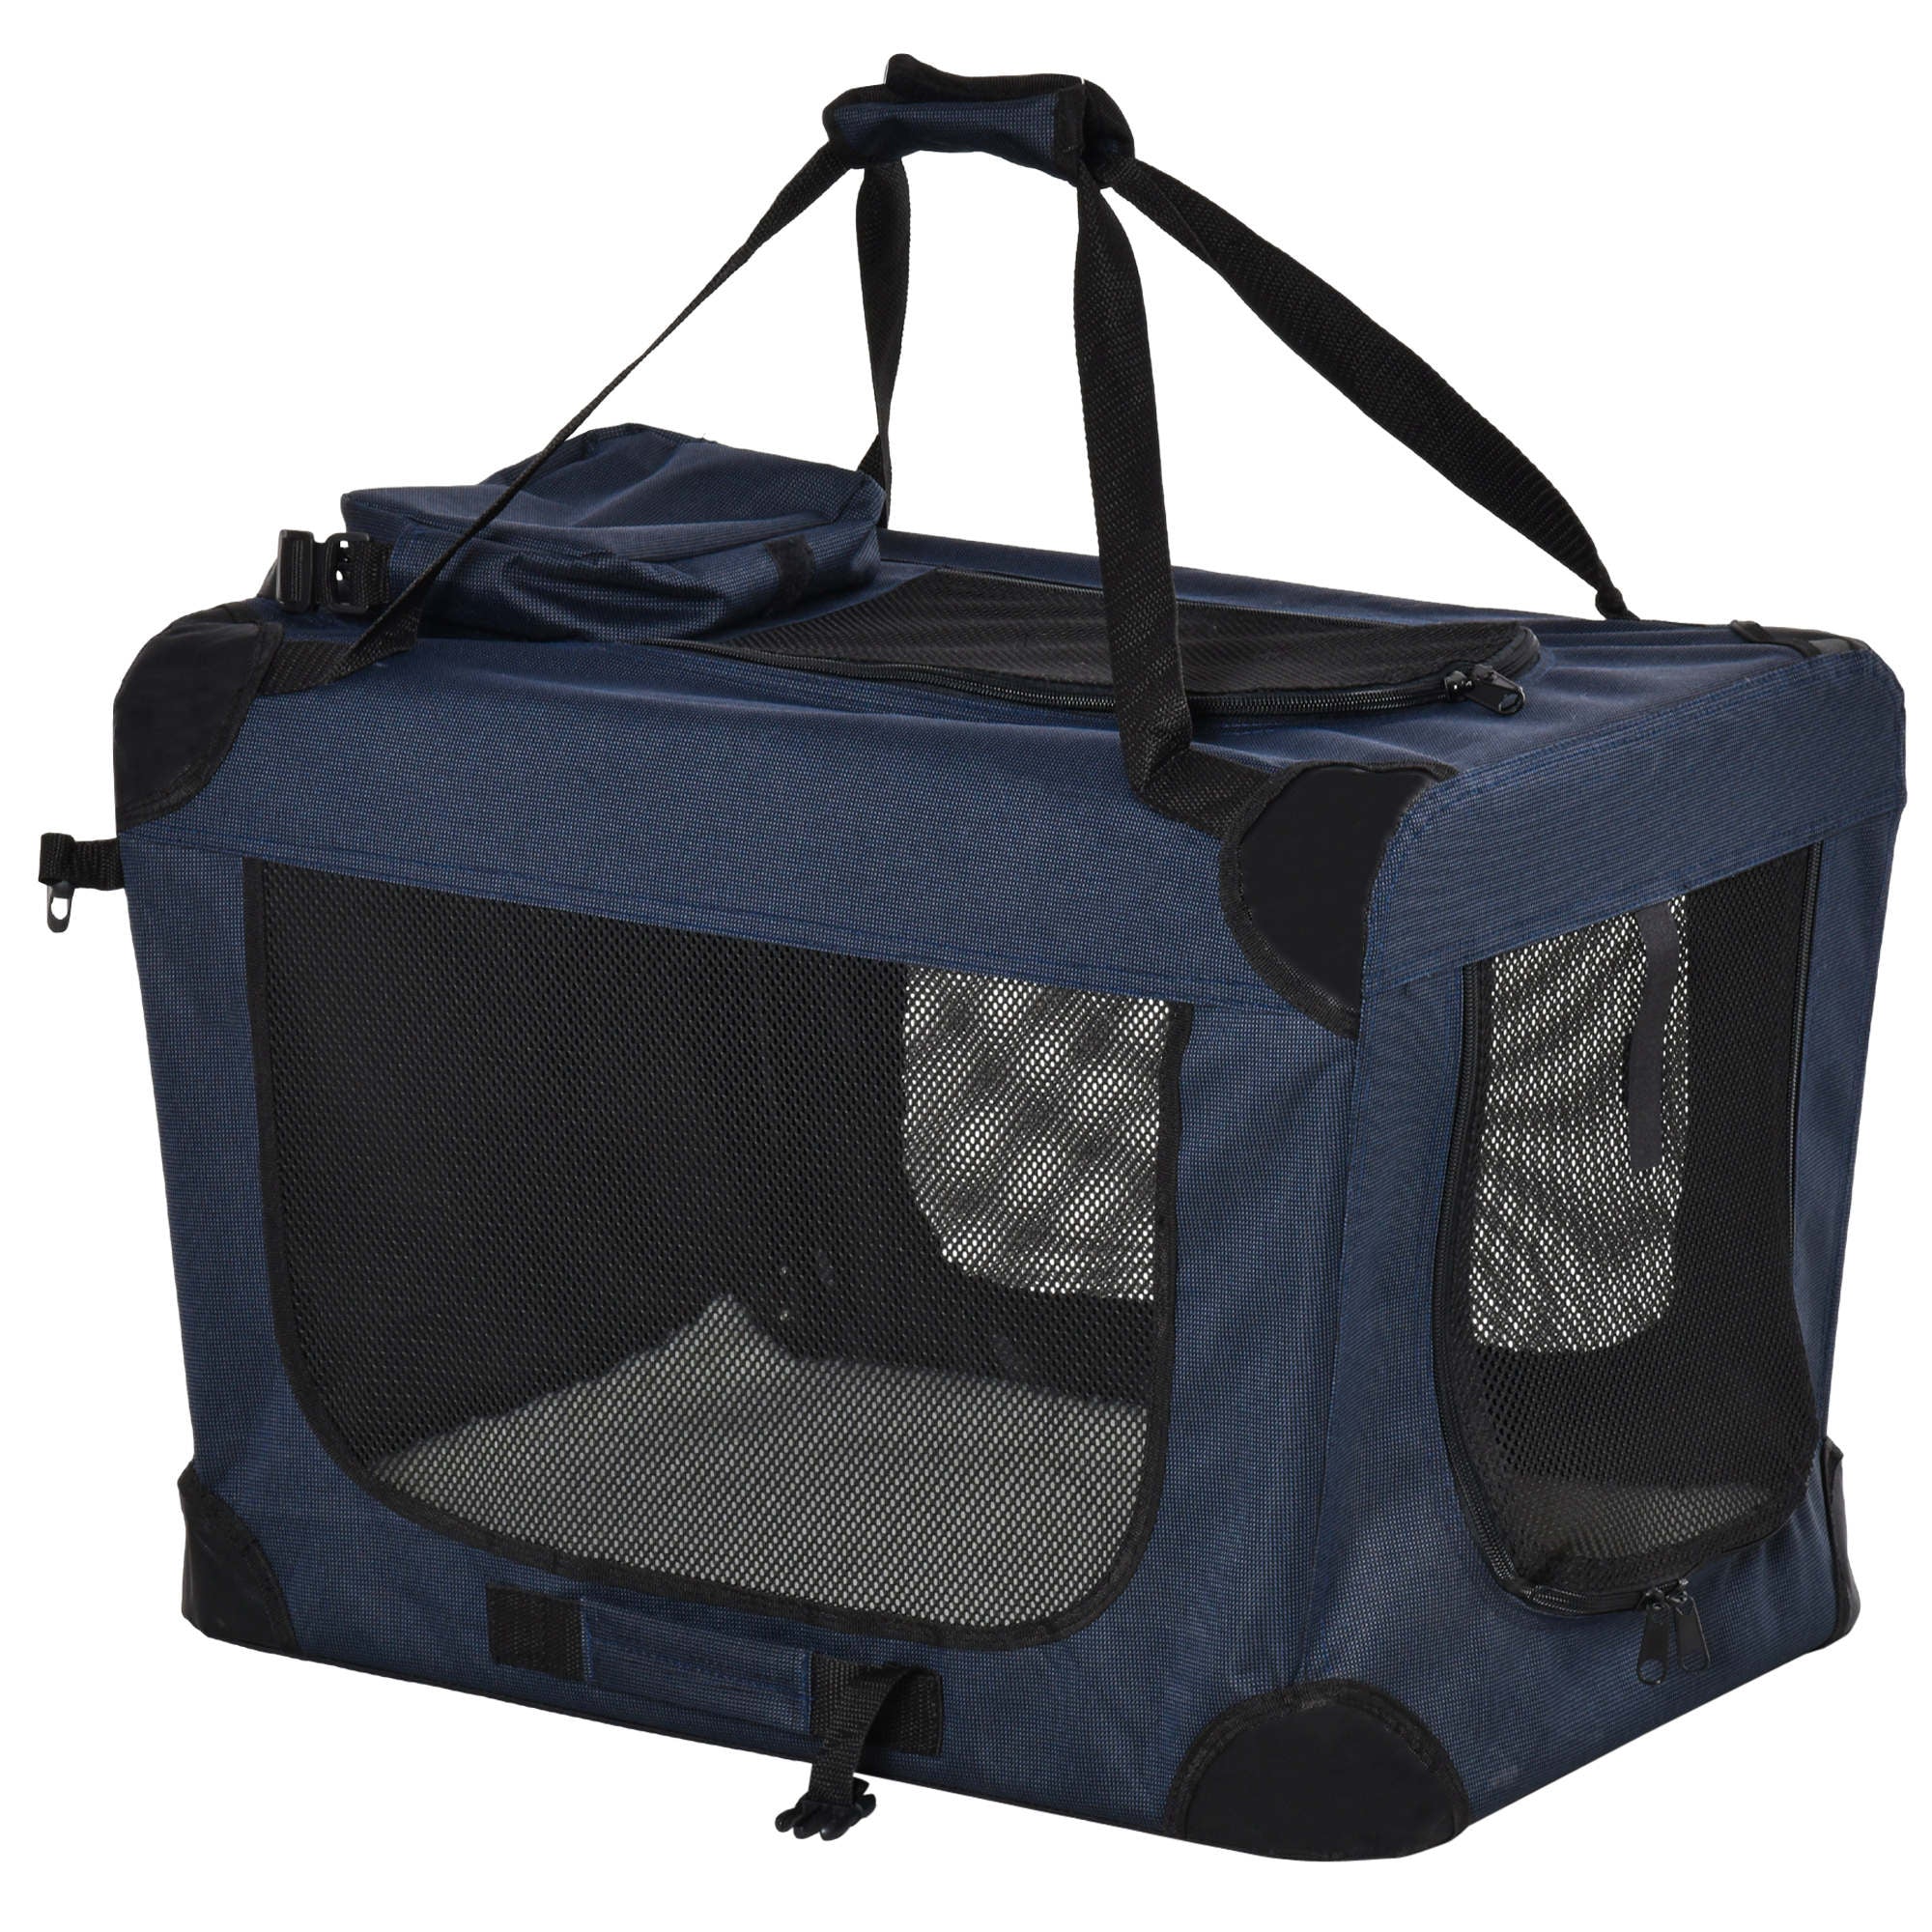 Compact Dark Blue Pet Crate with Mesh Windows, PawHut, 60 x 41.5 x 41 cm